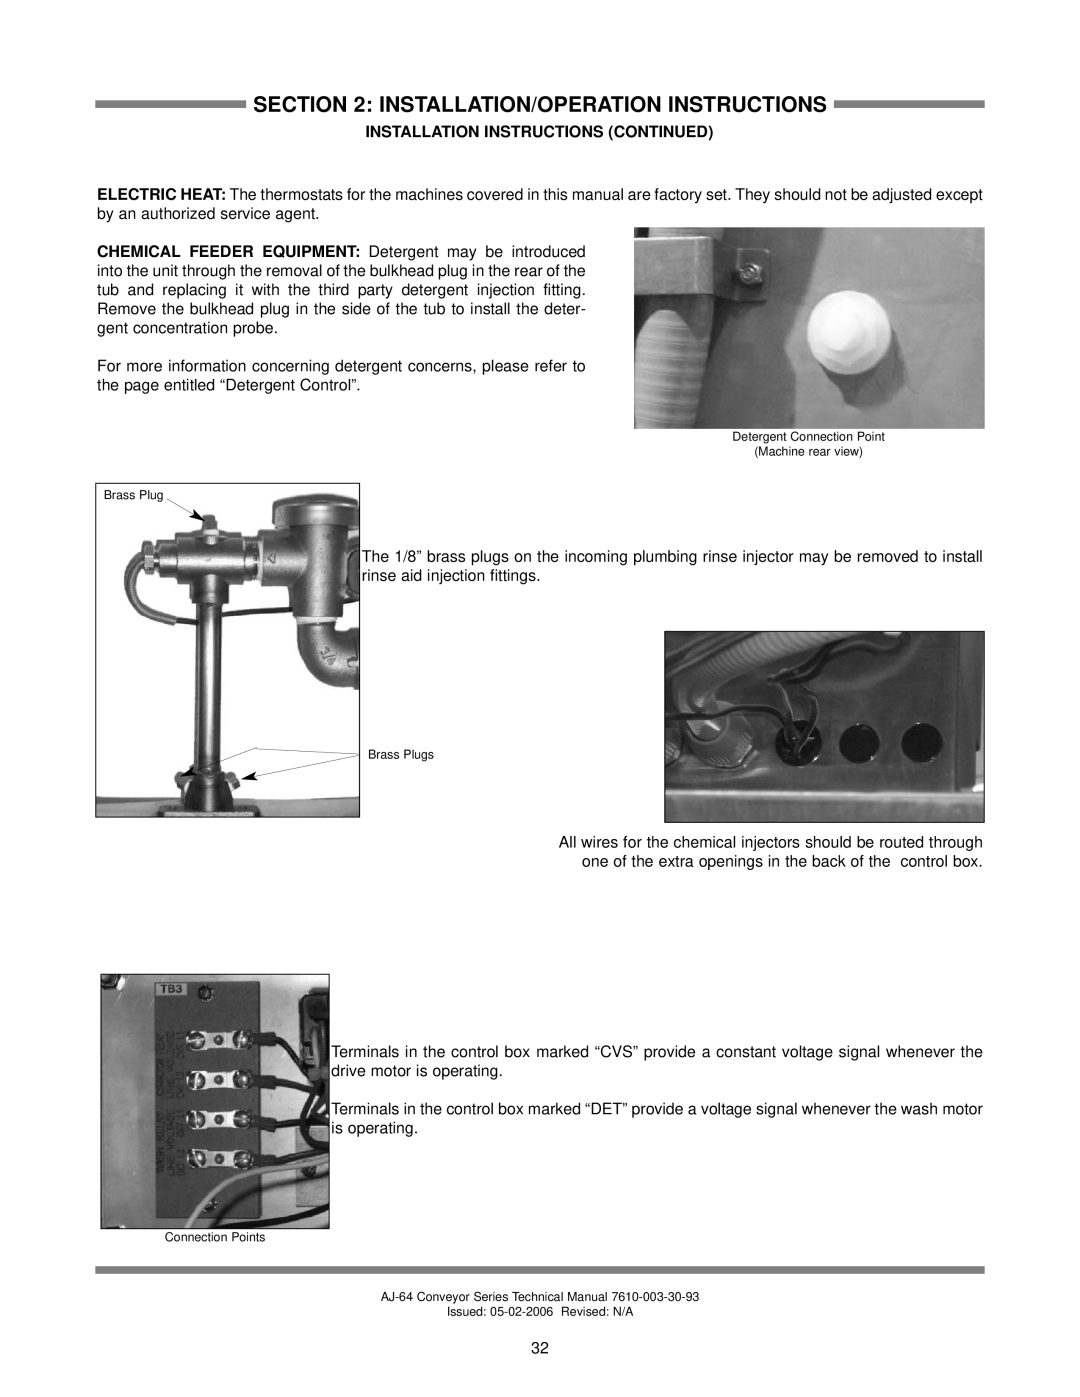 Jackson AJ-86CGP, AJ-64CS Installation Instructions Continued, Brass Plug, Detergent Connection Point Machine rear view 